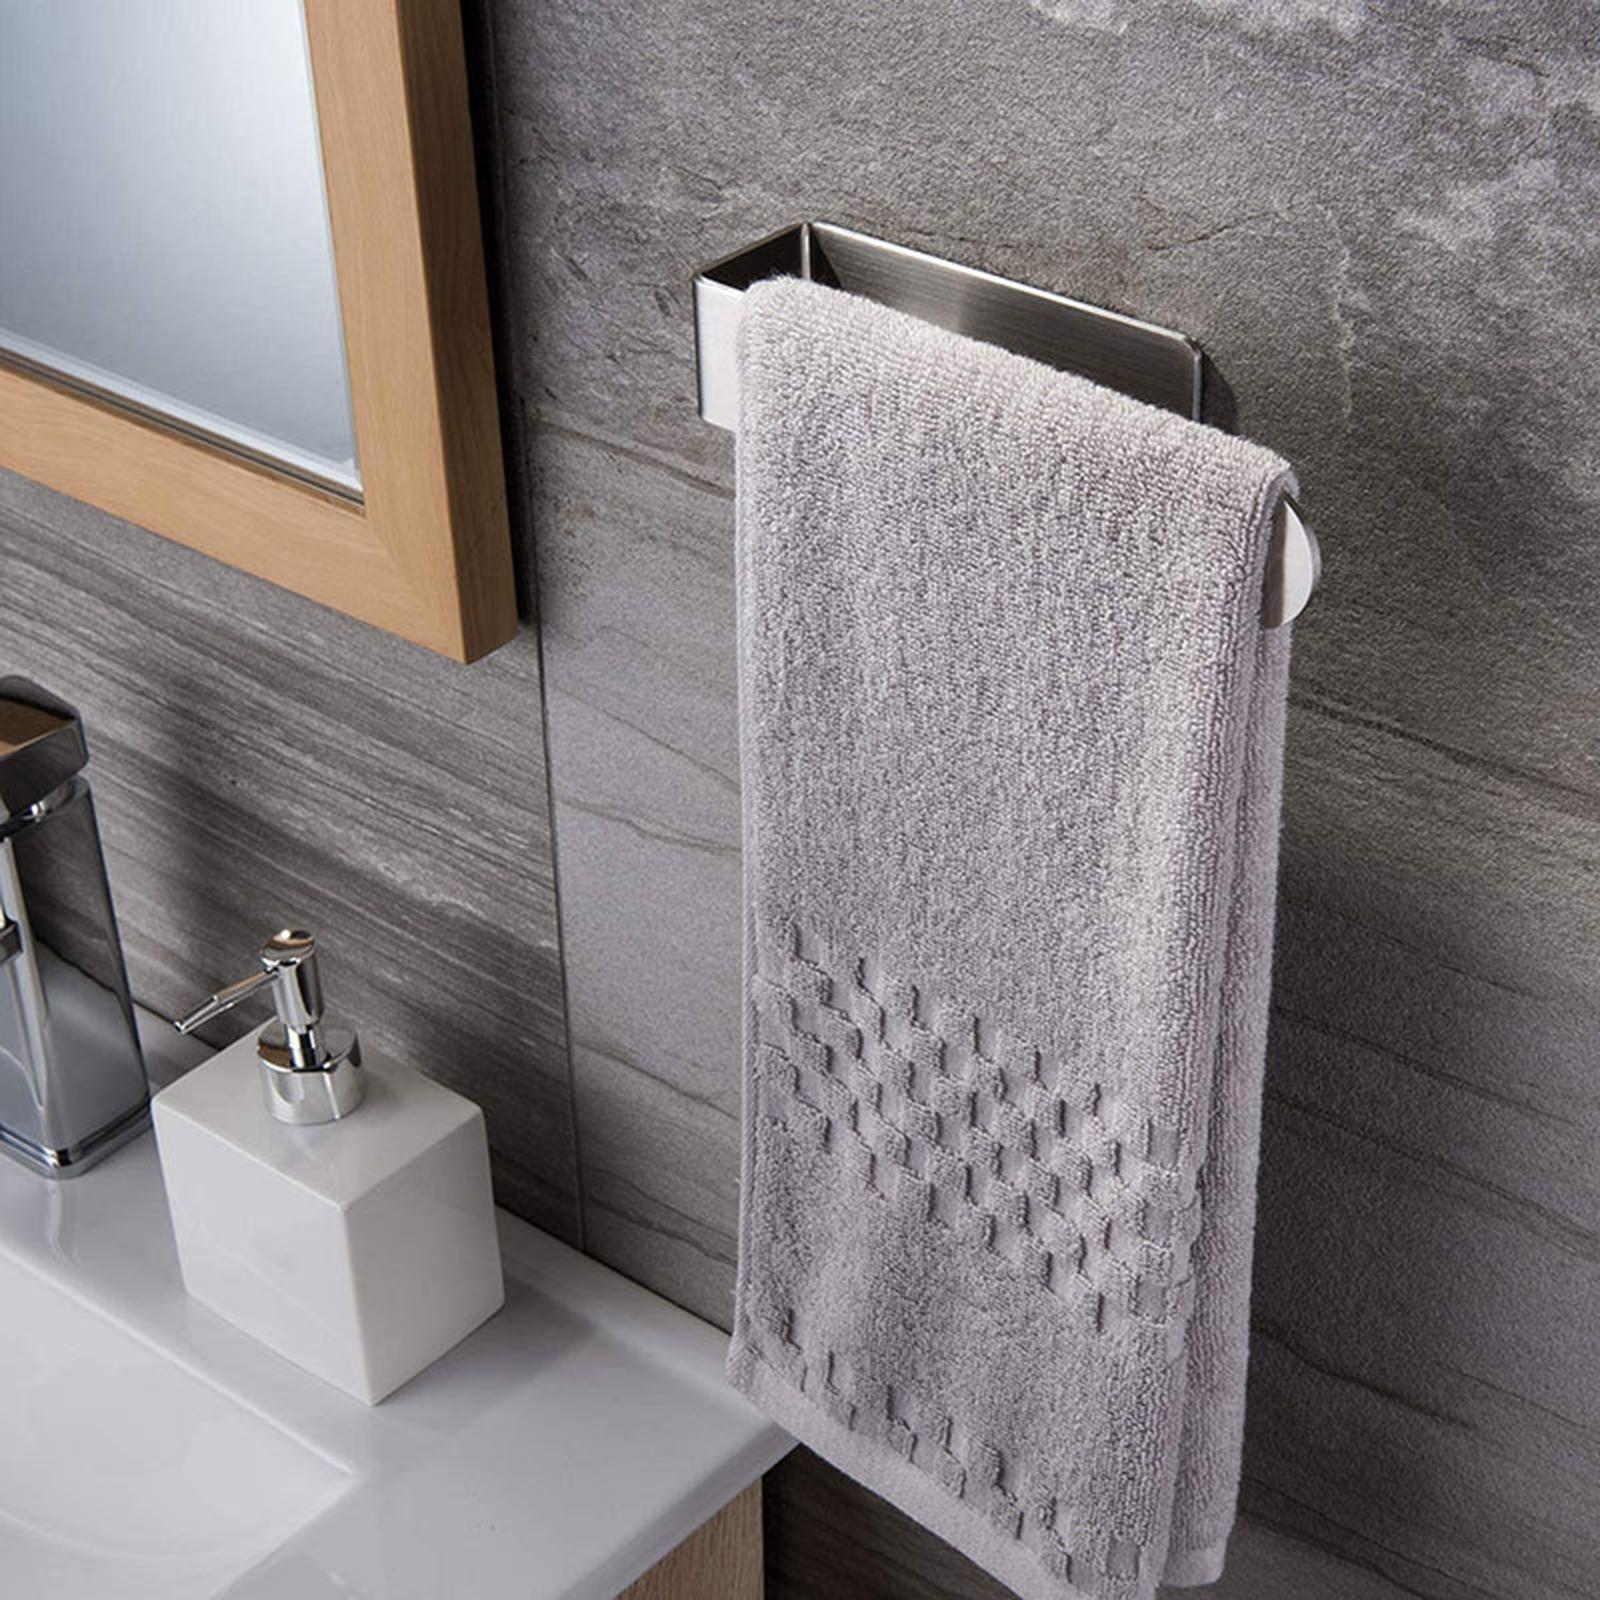 Towel Rack, Towel Shelf, Wall Mounted Storage Holder, Robe Hanger, Towel Bar, Towel Rail for Bathroom, Cabinet, Bedroom, Hotel